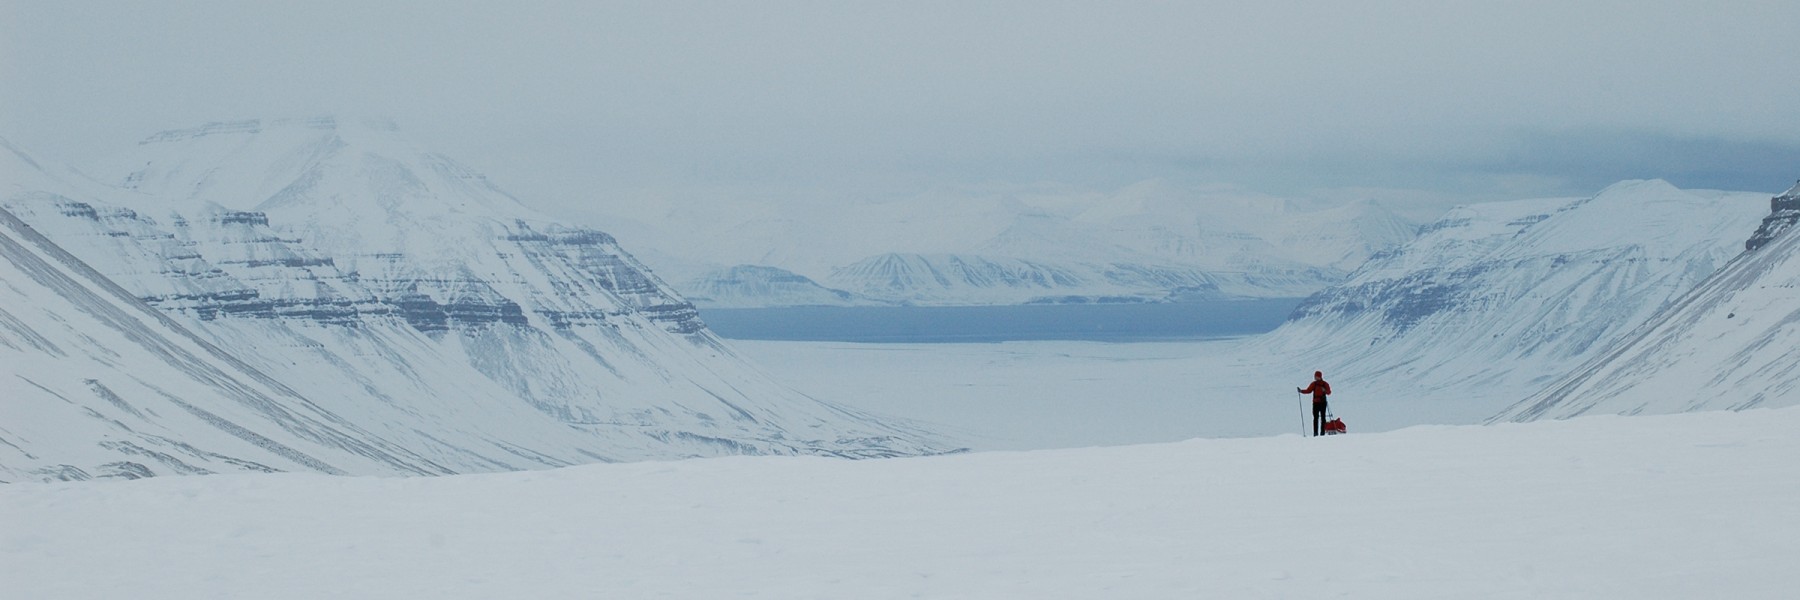 Inivildmarken_Svalbard_landscape